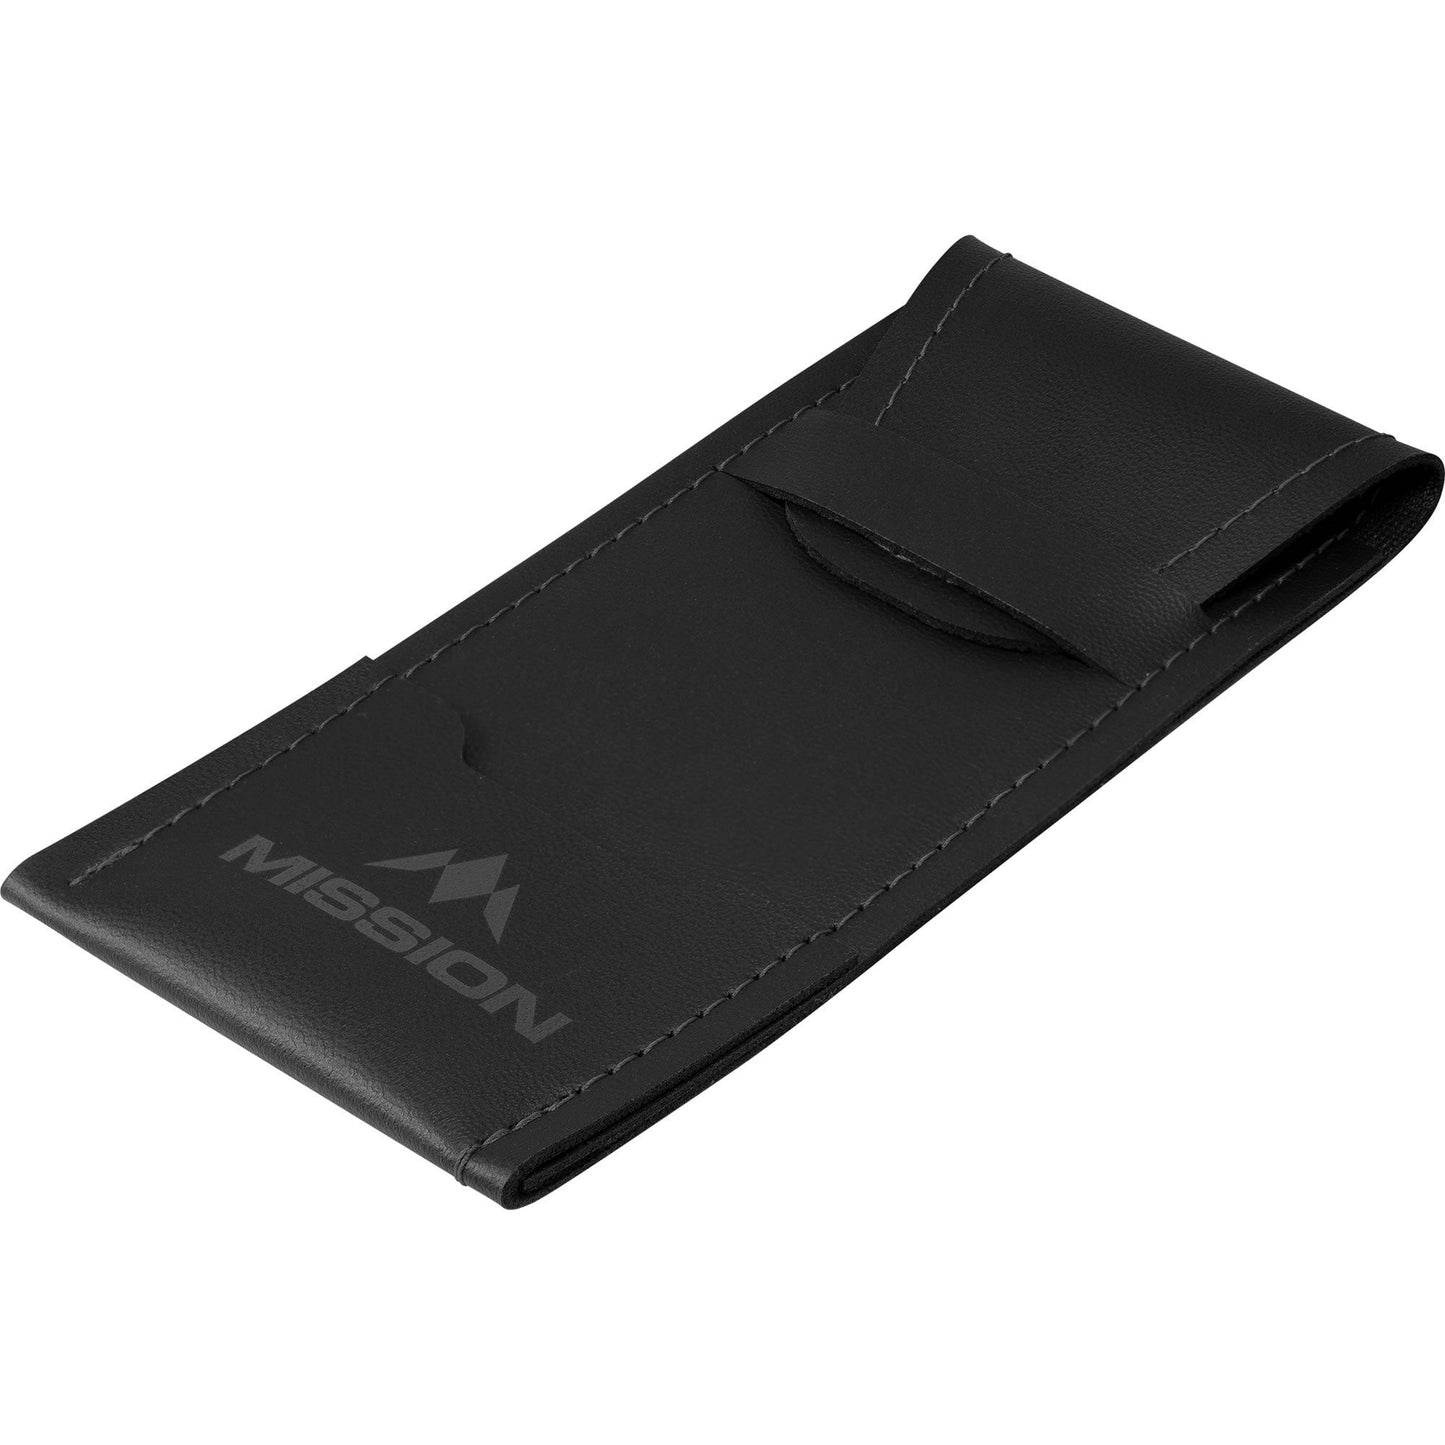 Mission Sport 8 Darts Case - Black Bar Wallet with Trim